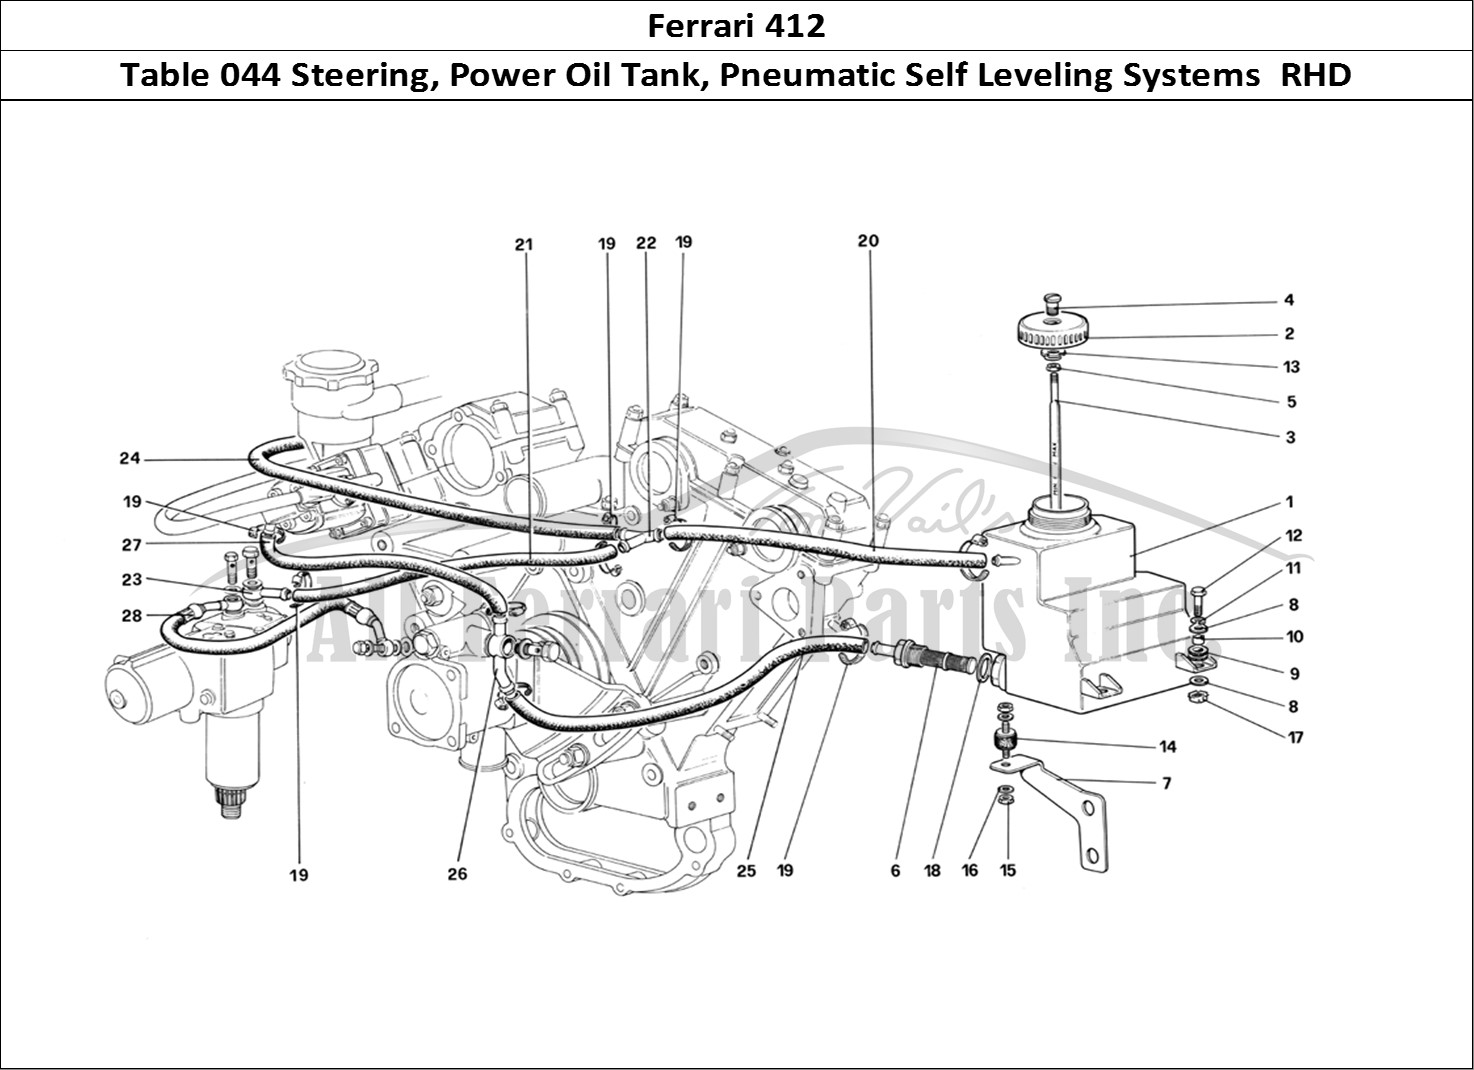 Ferrari Parts Ferrari 412 (Mechanical) Page 044 Power Steering Oil Tank -